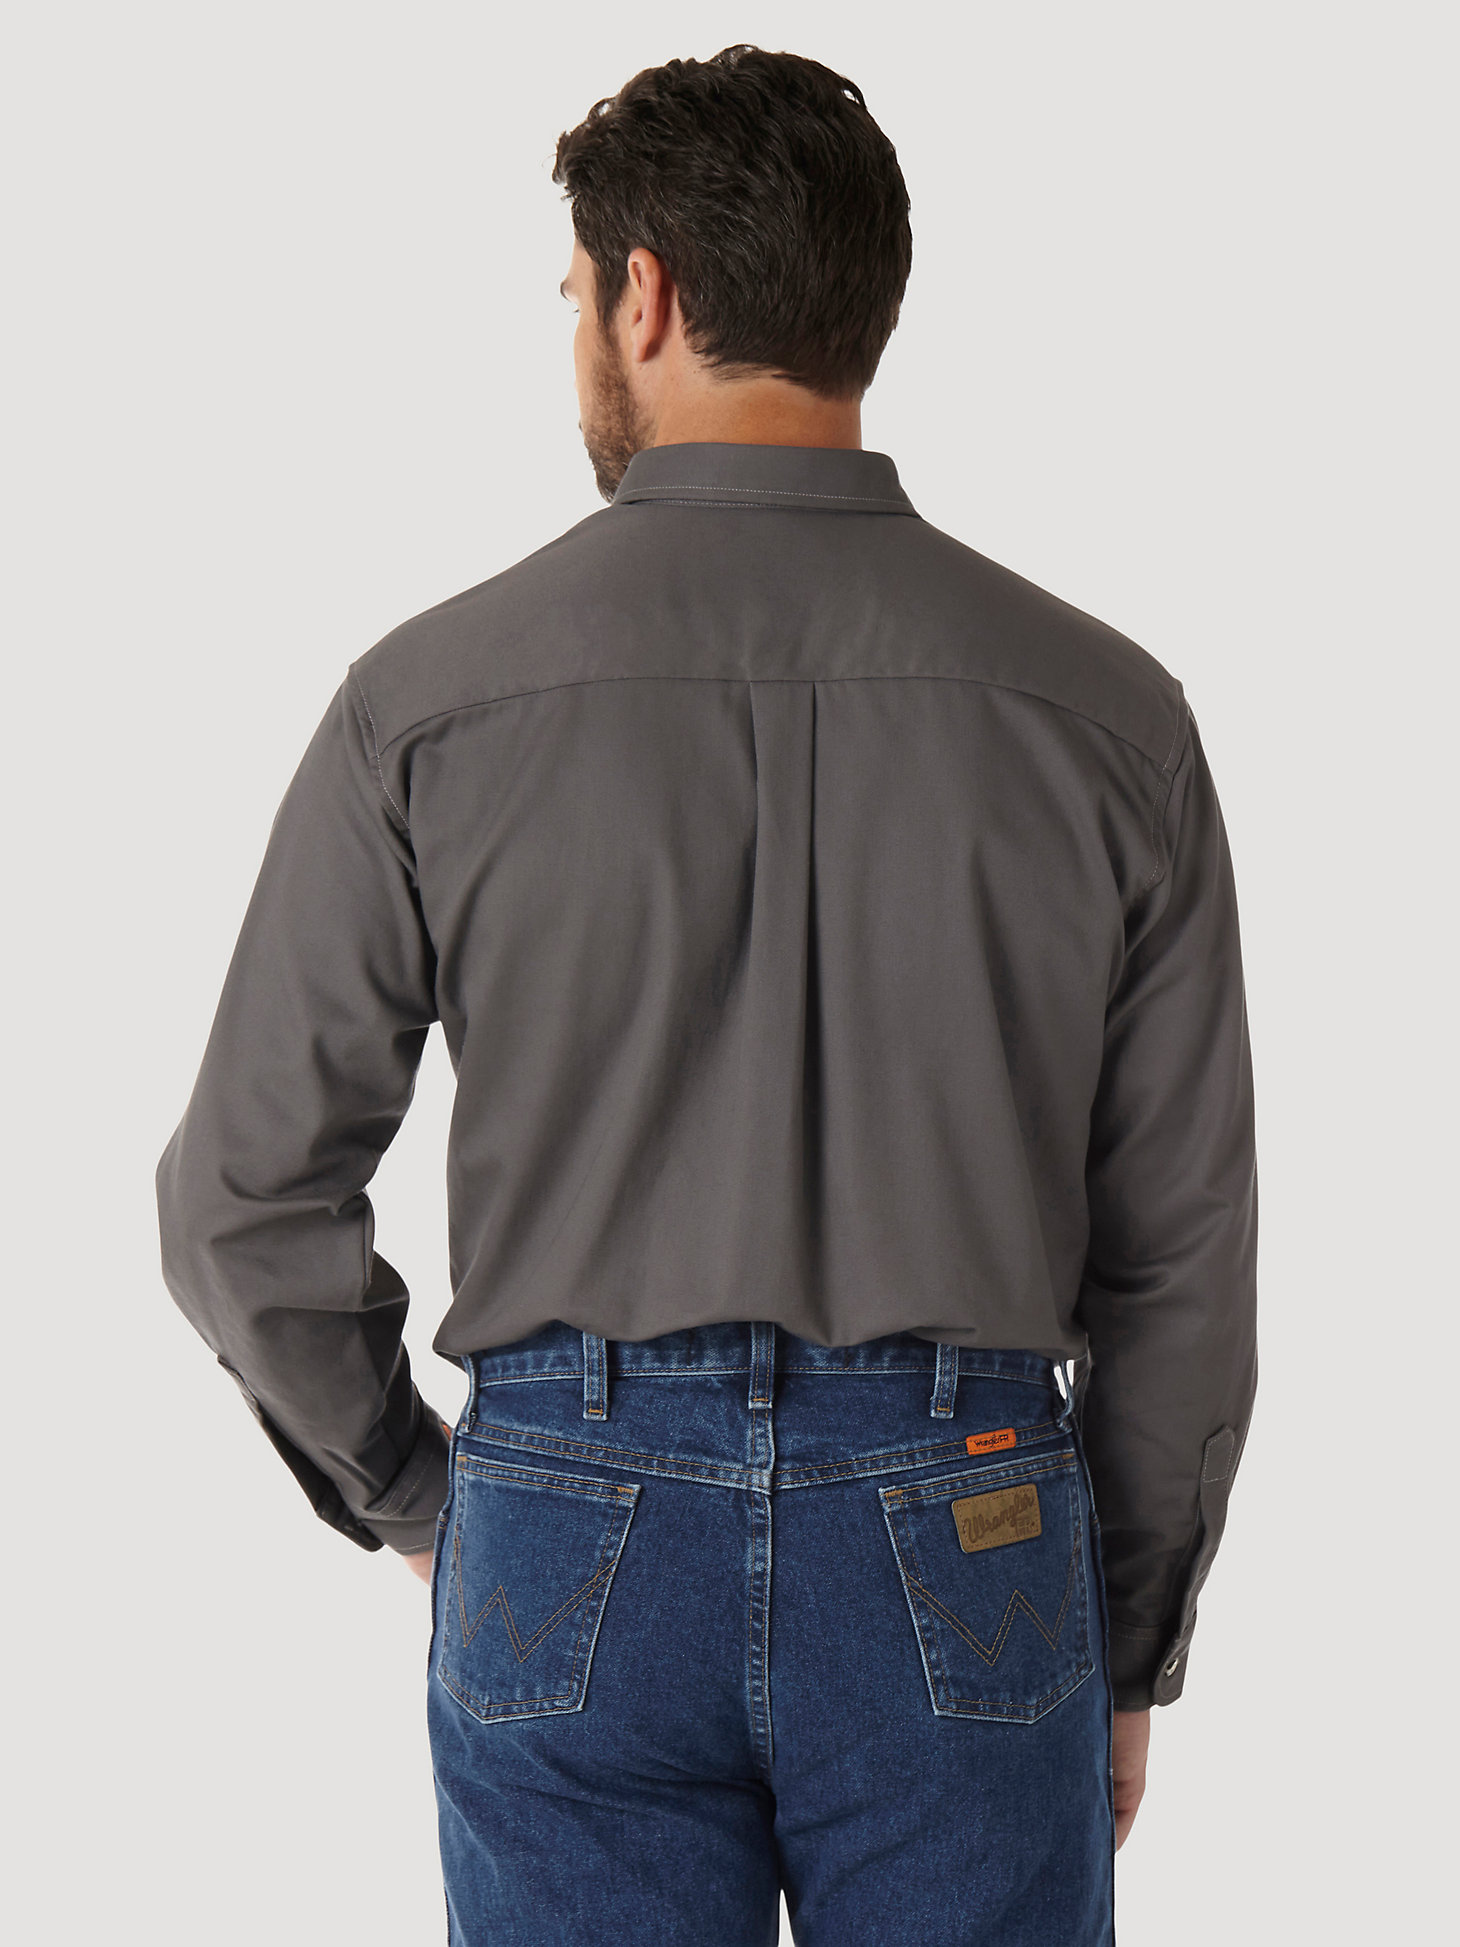 Wrangler® RIGGS Workwear® FR Flame Resistant Work Shirt in Slate Grey alternative view 1